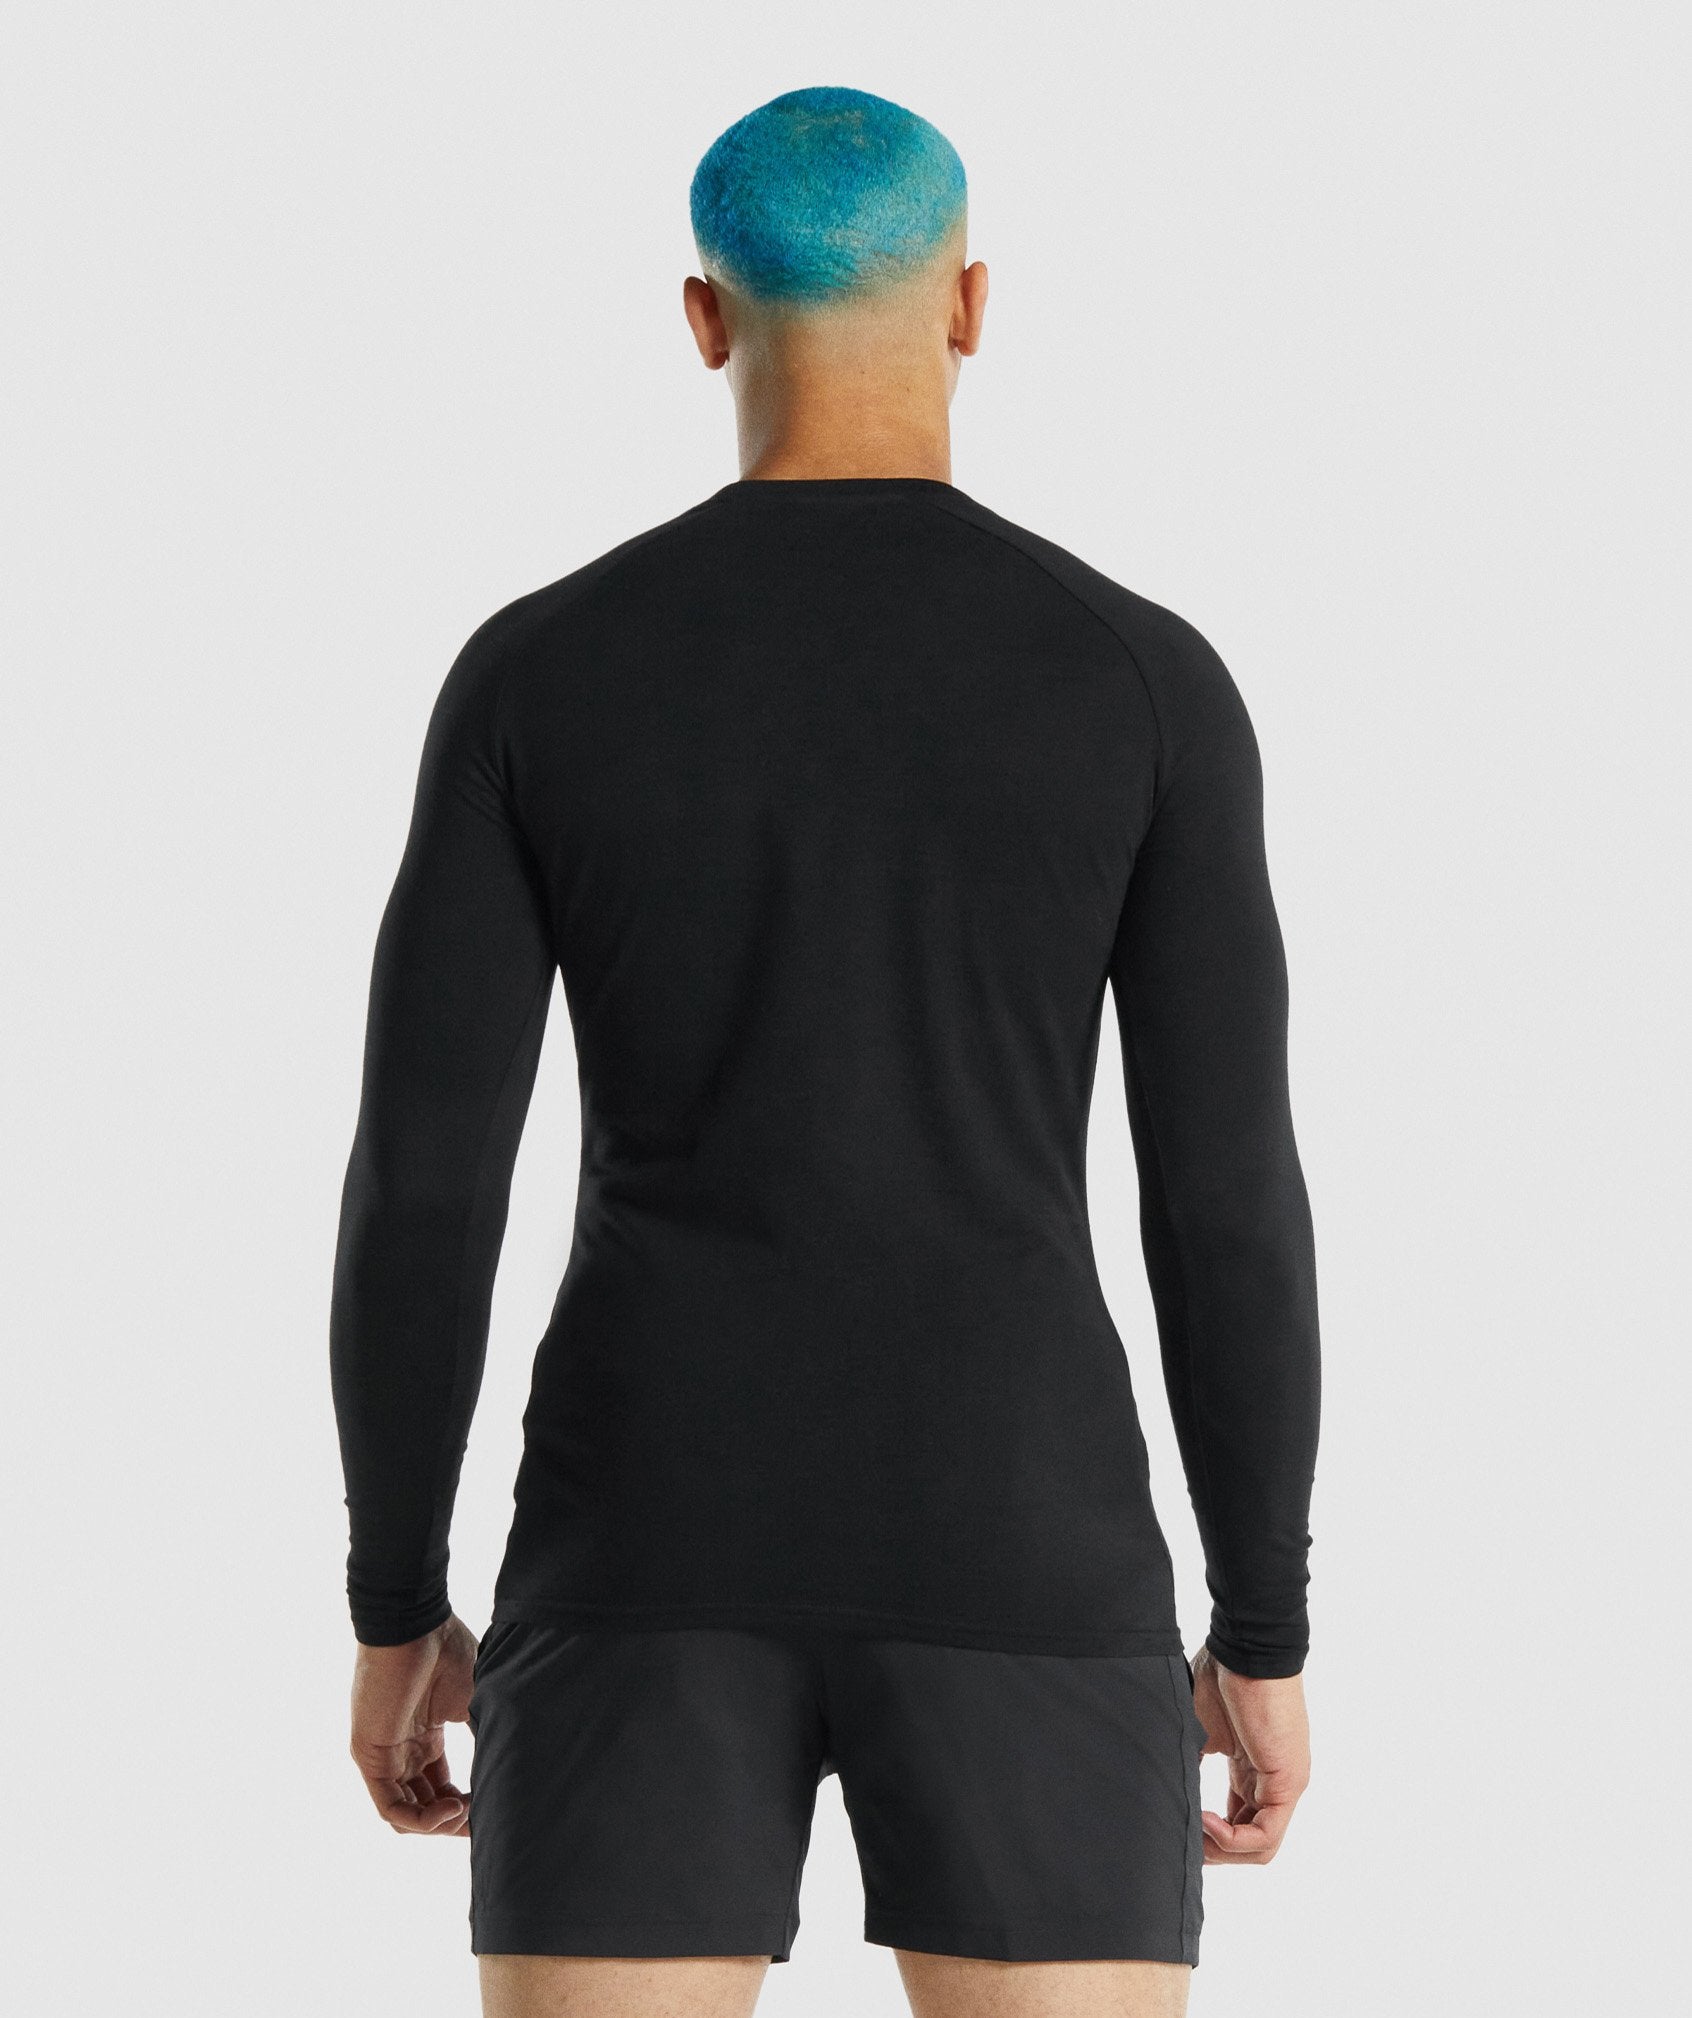 Apollo Long Sleeve T-Shirt in Black